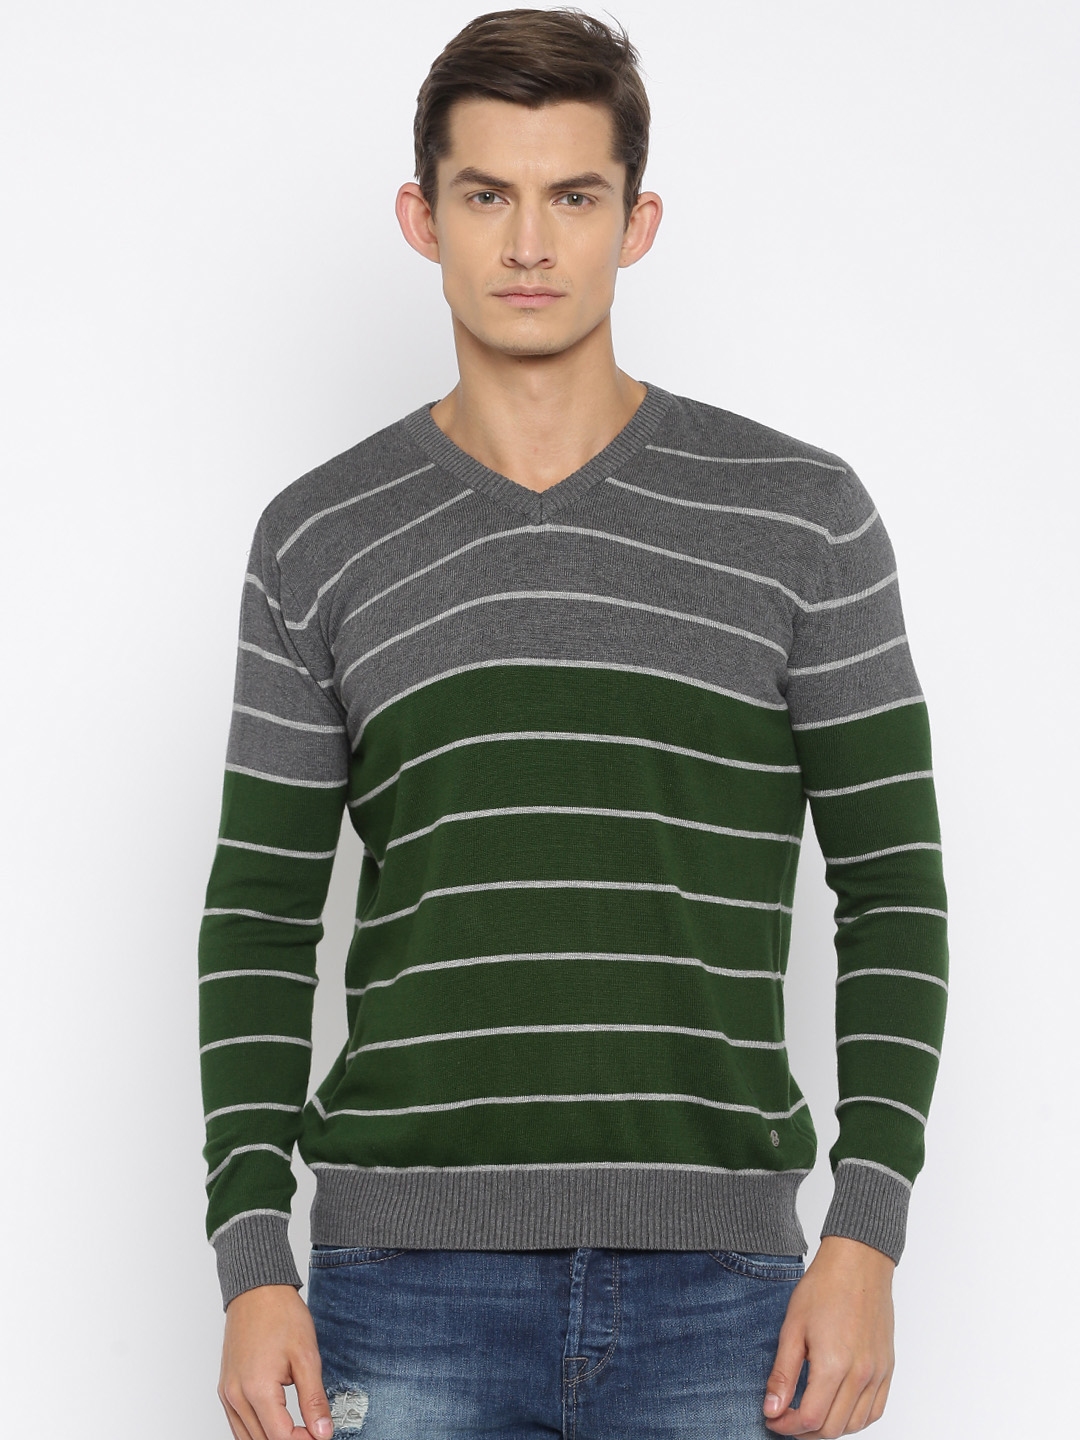 Buy Roadster Green & Grey Striped Sweater - Sweaters for Men 1370997 ...